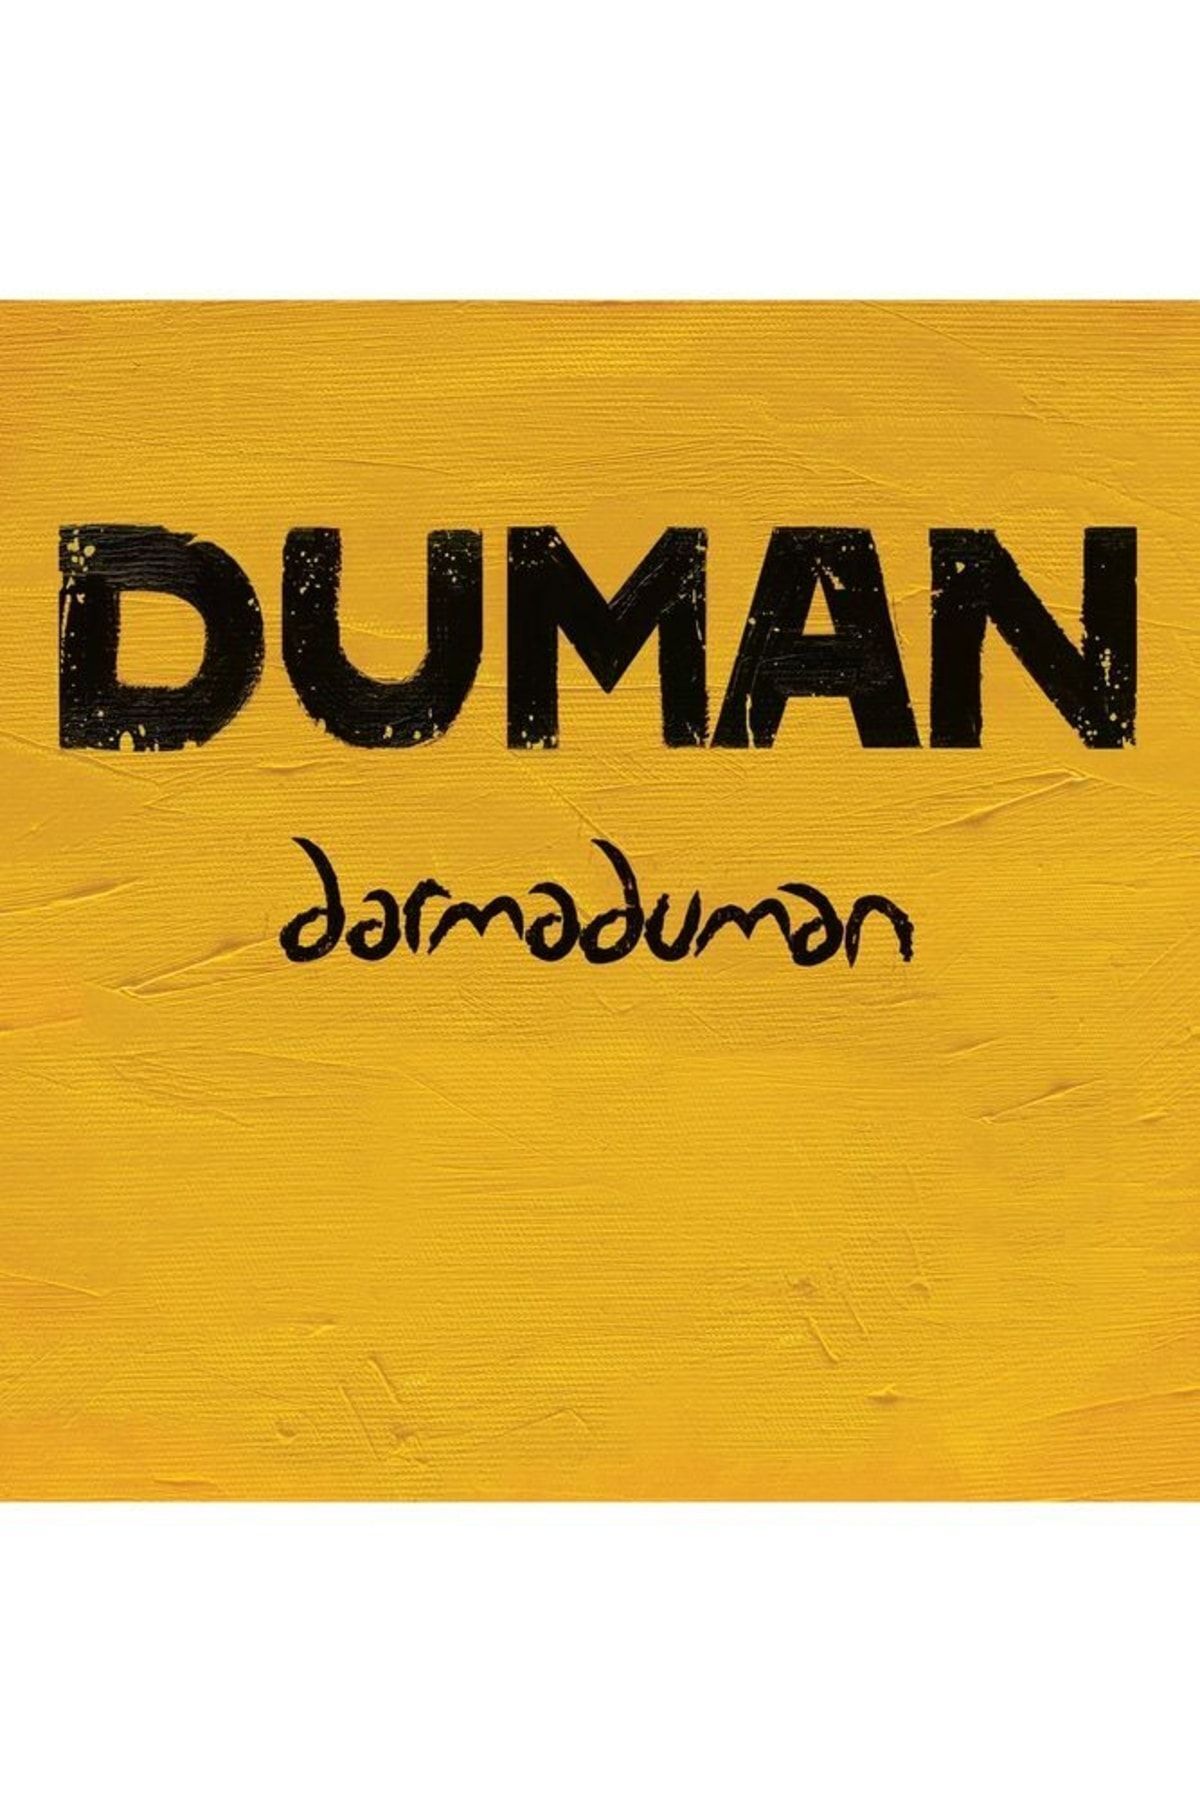 plakmarketi Duman - Darmaduman (2 PLAK)